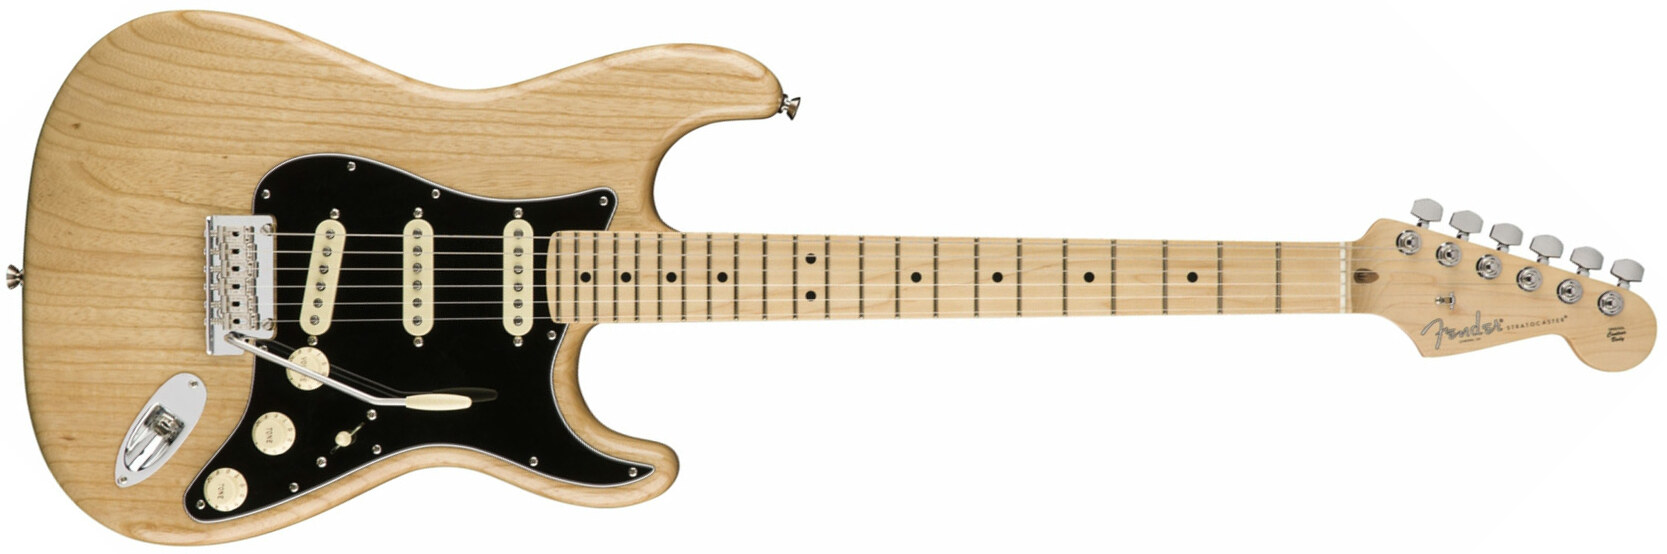 Fender Strat American Professional 3s Usa Mn - Natural - Guitare Électrique Forme Str - Main picture